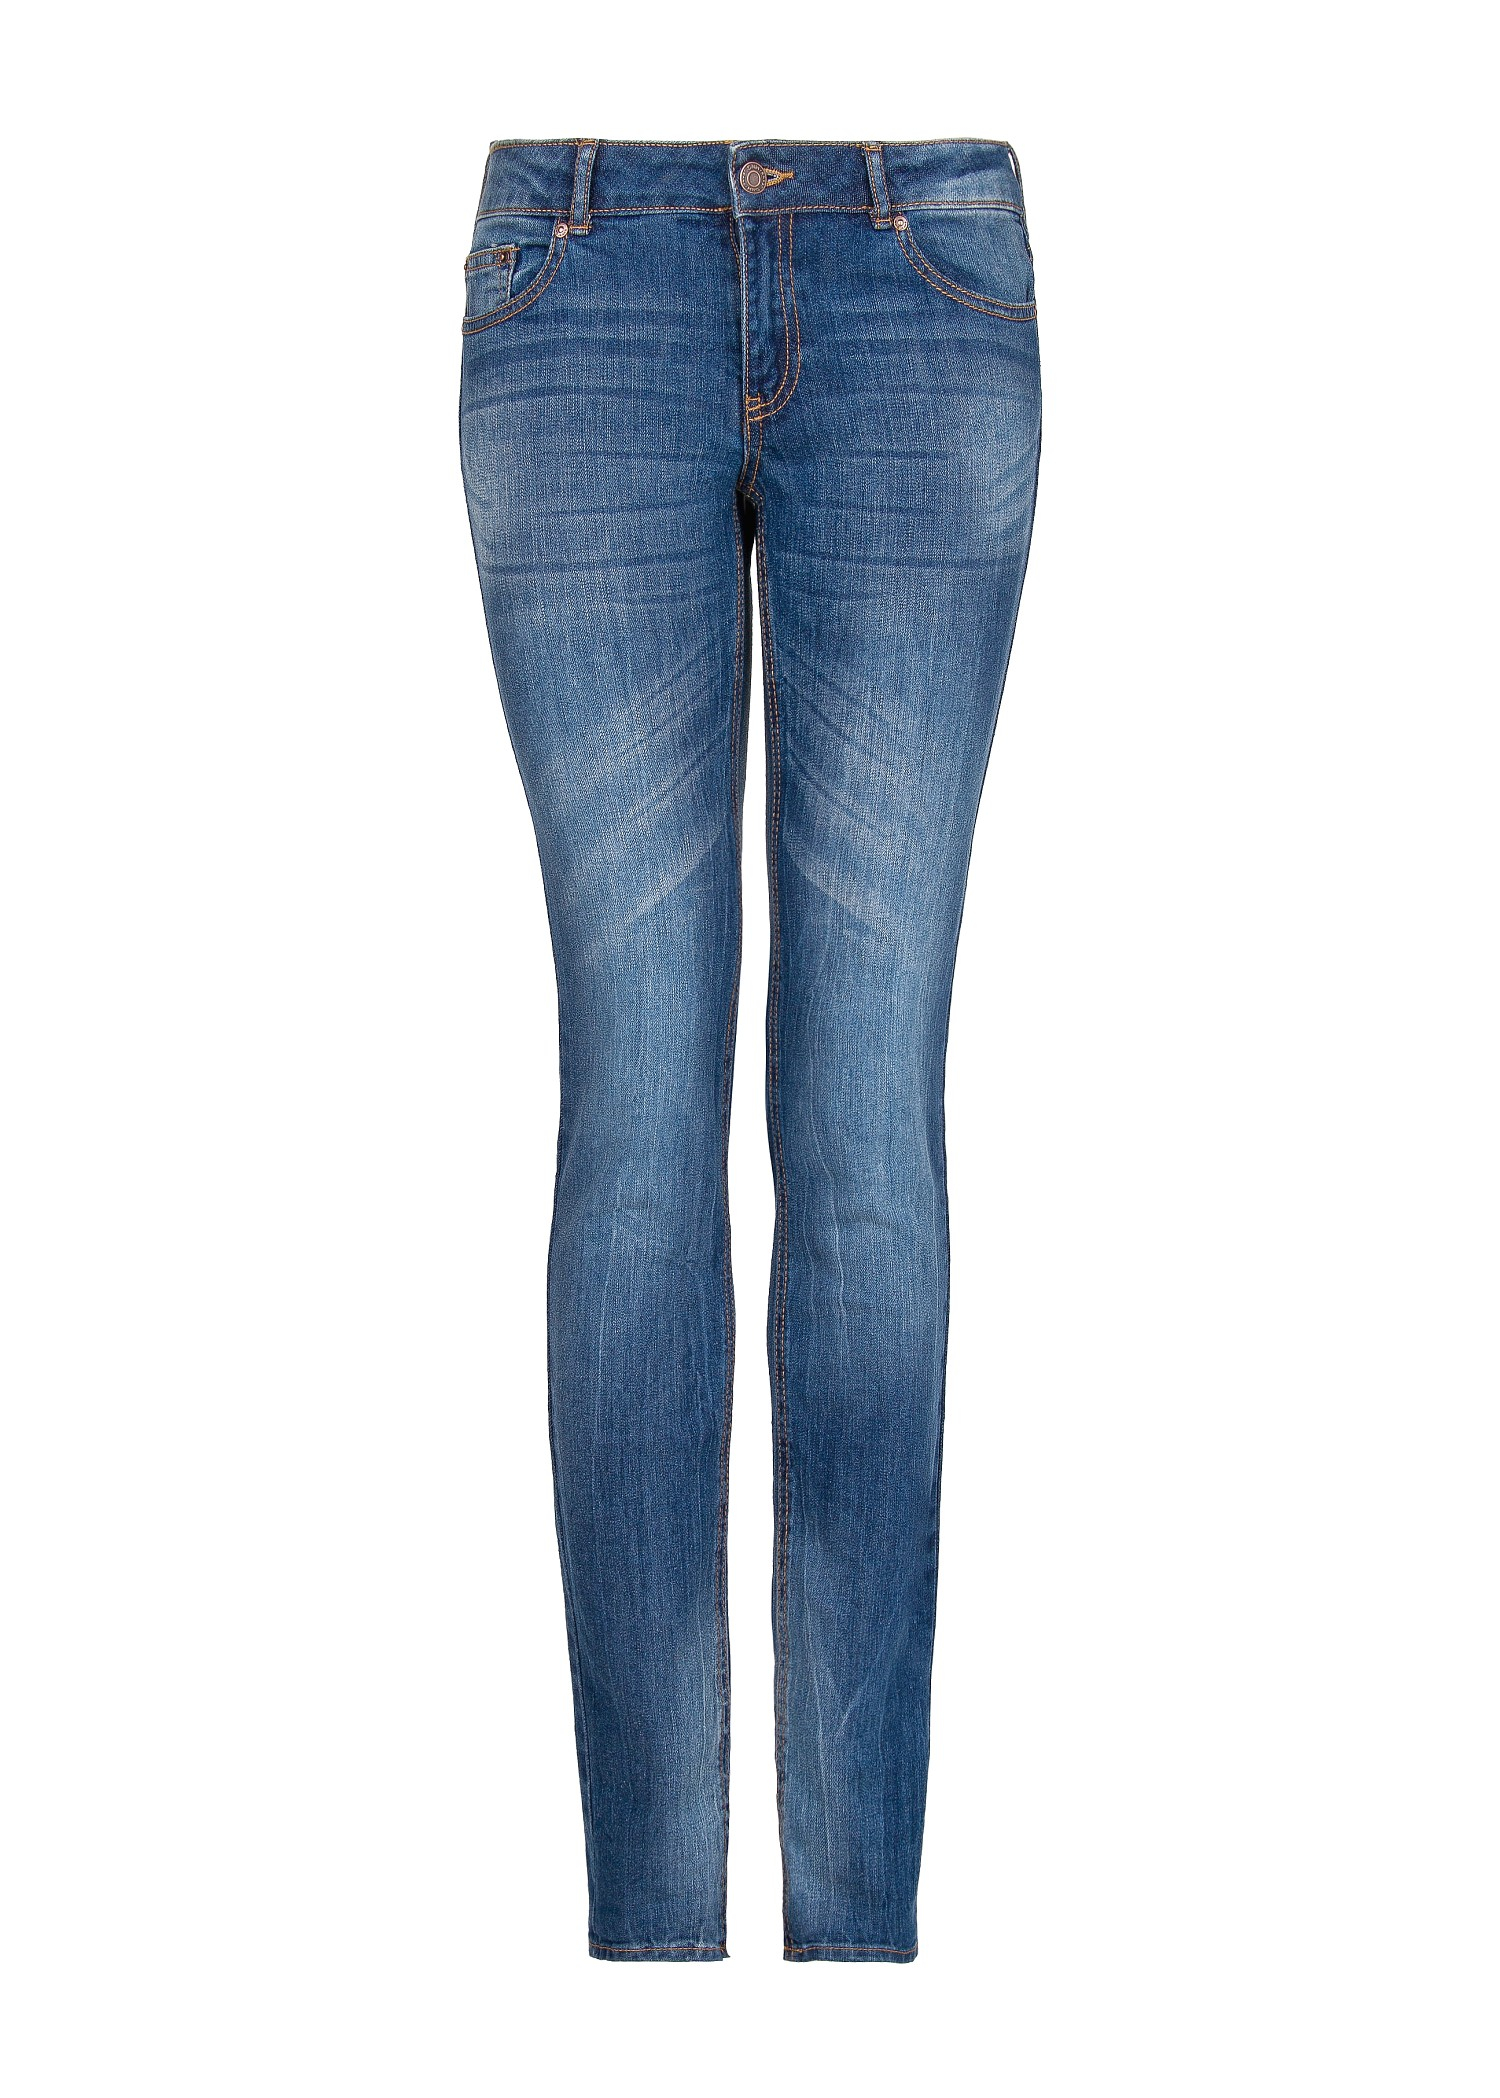 Lyst - Mango Slim Fit Alice Jeans in Blue